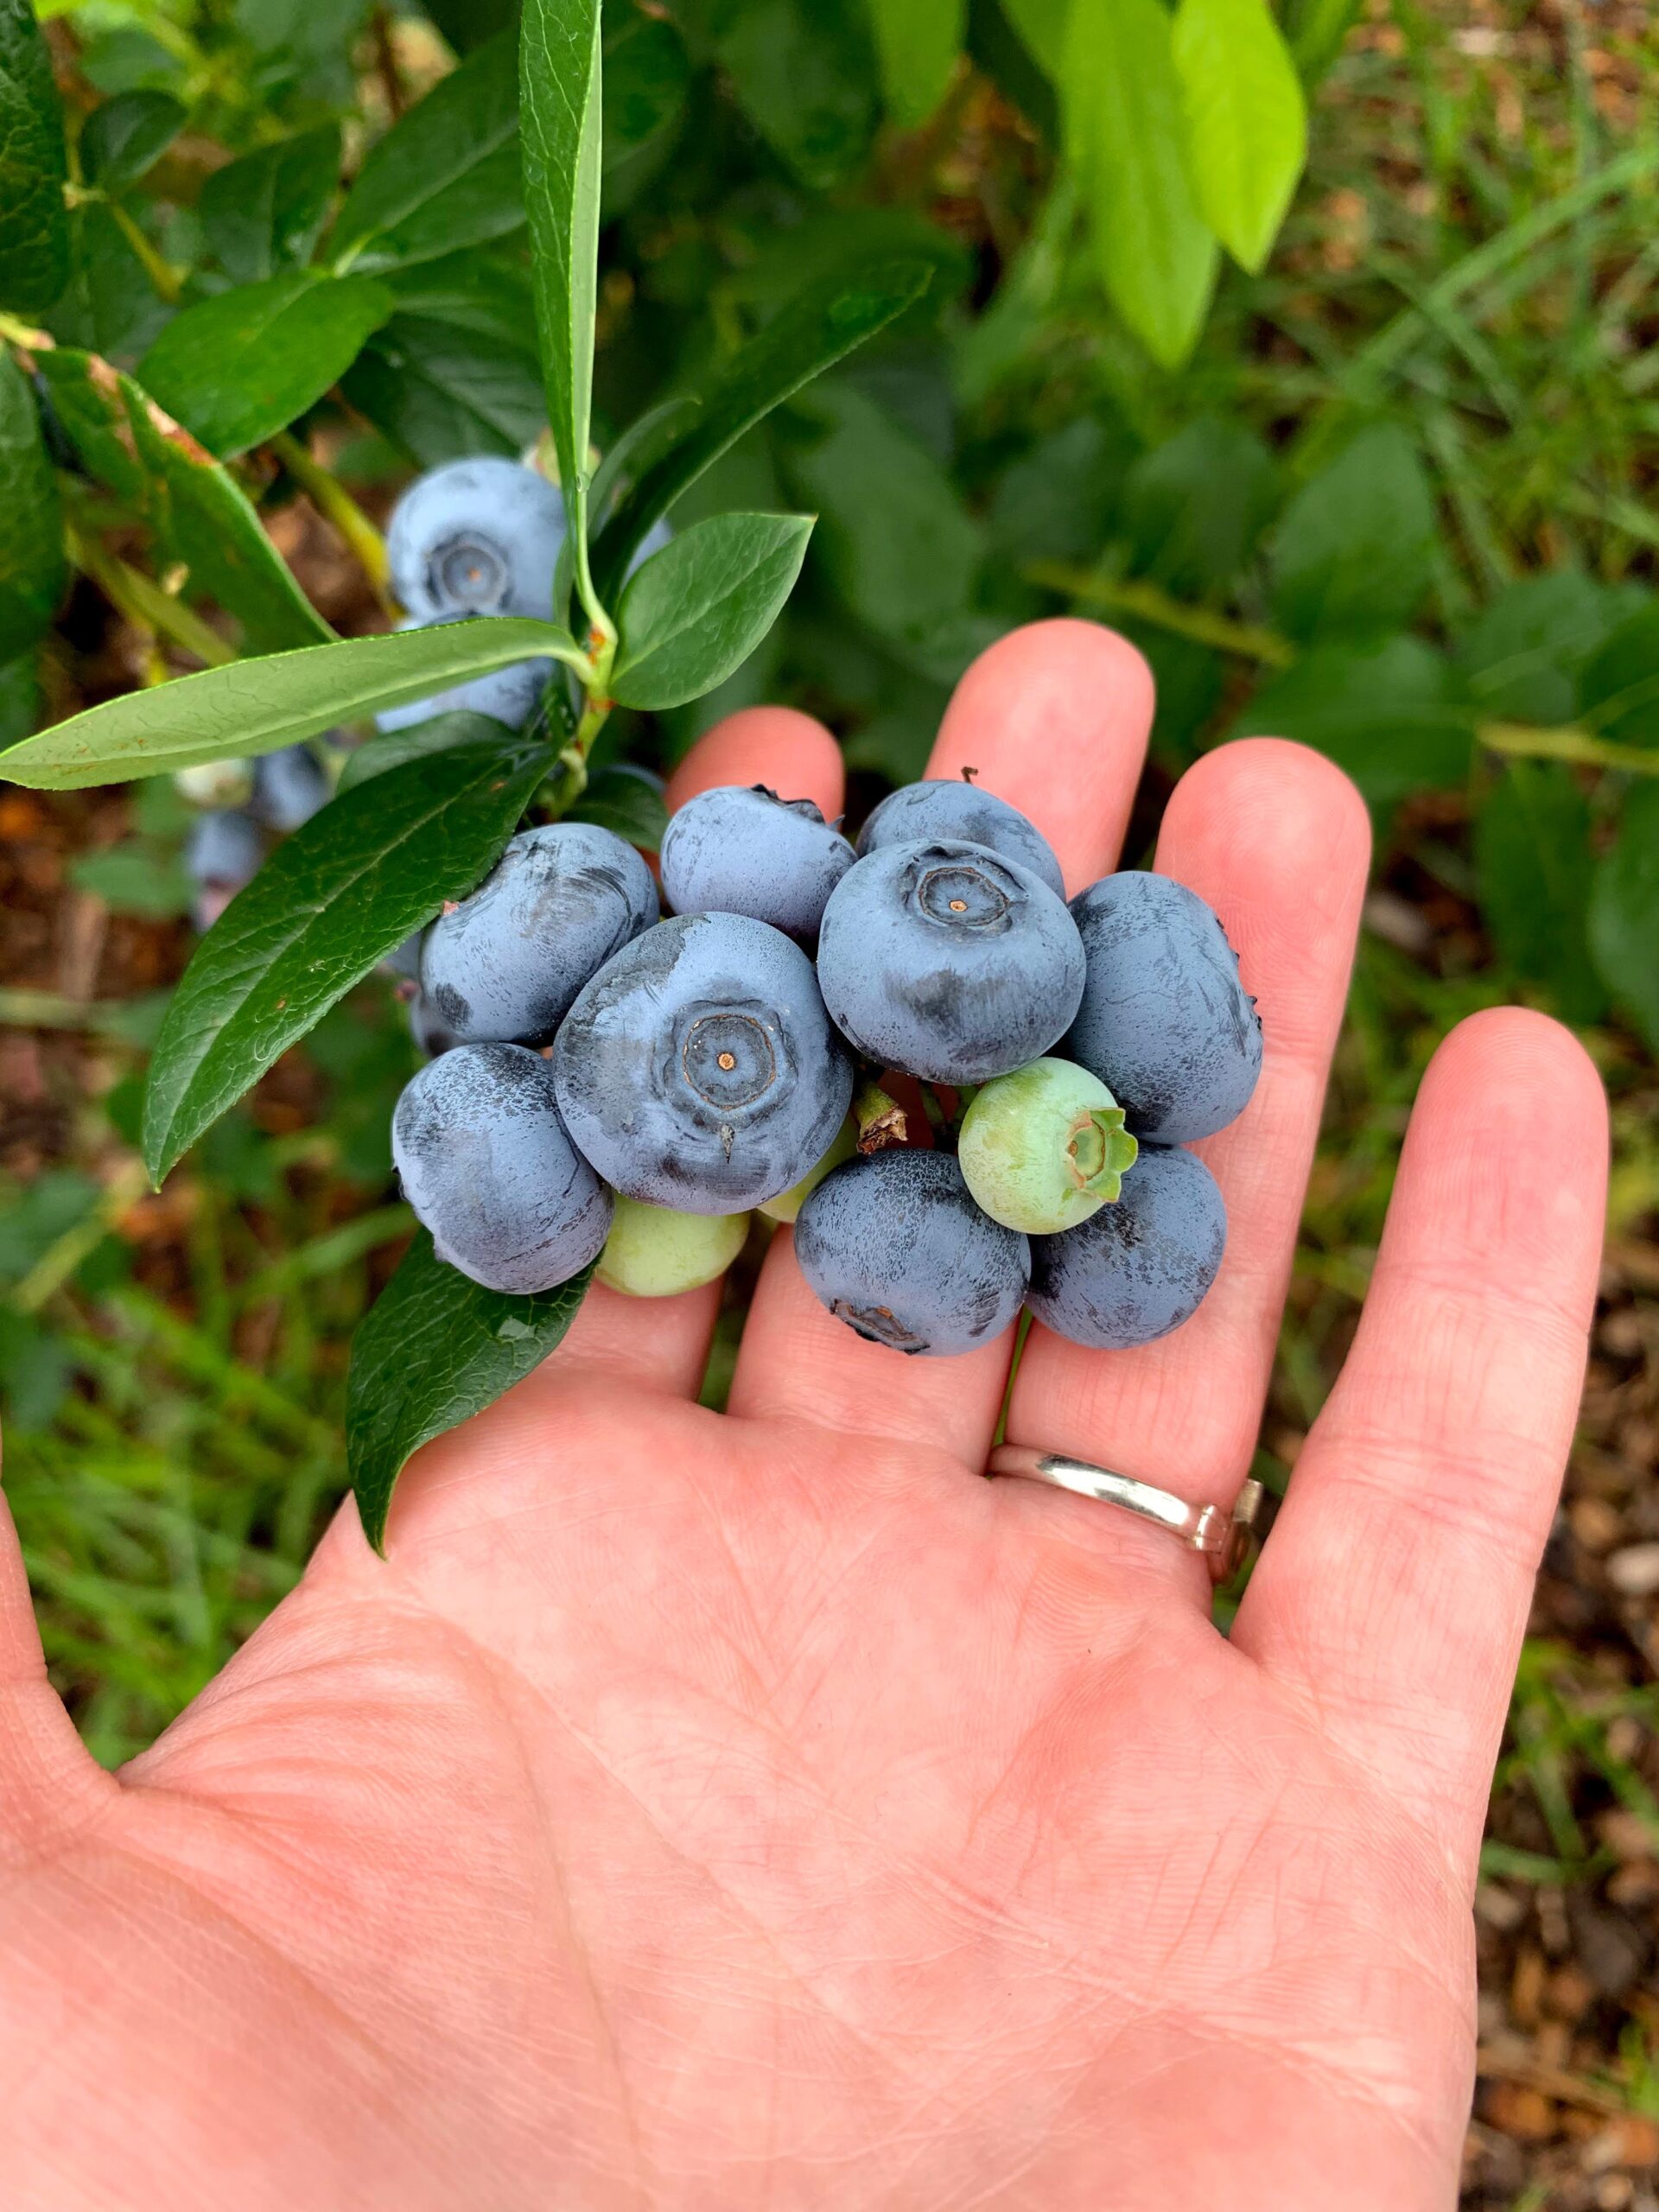 Pick Your Own Blueberries - CN Smith Farm